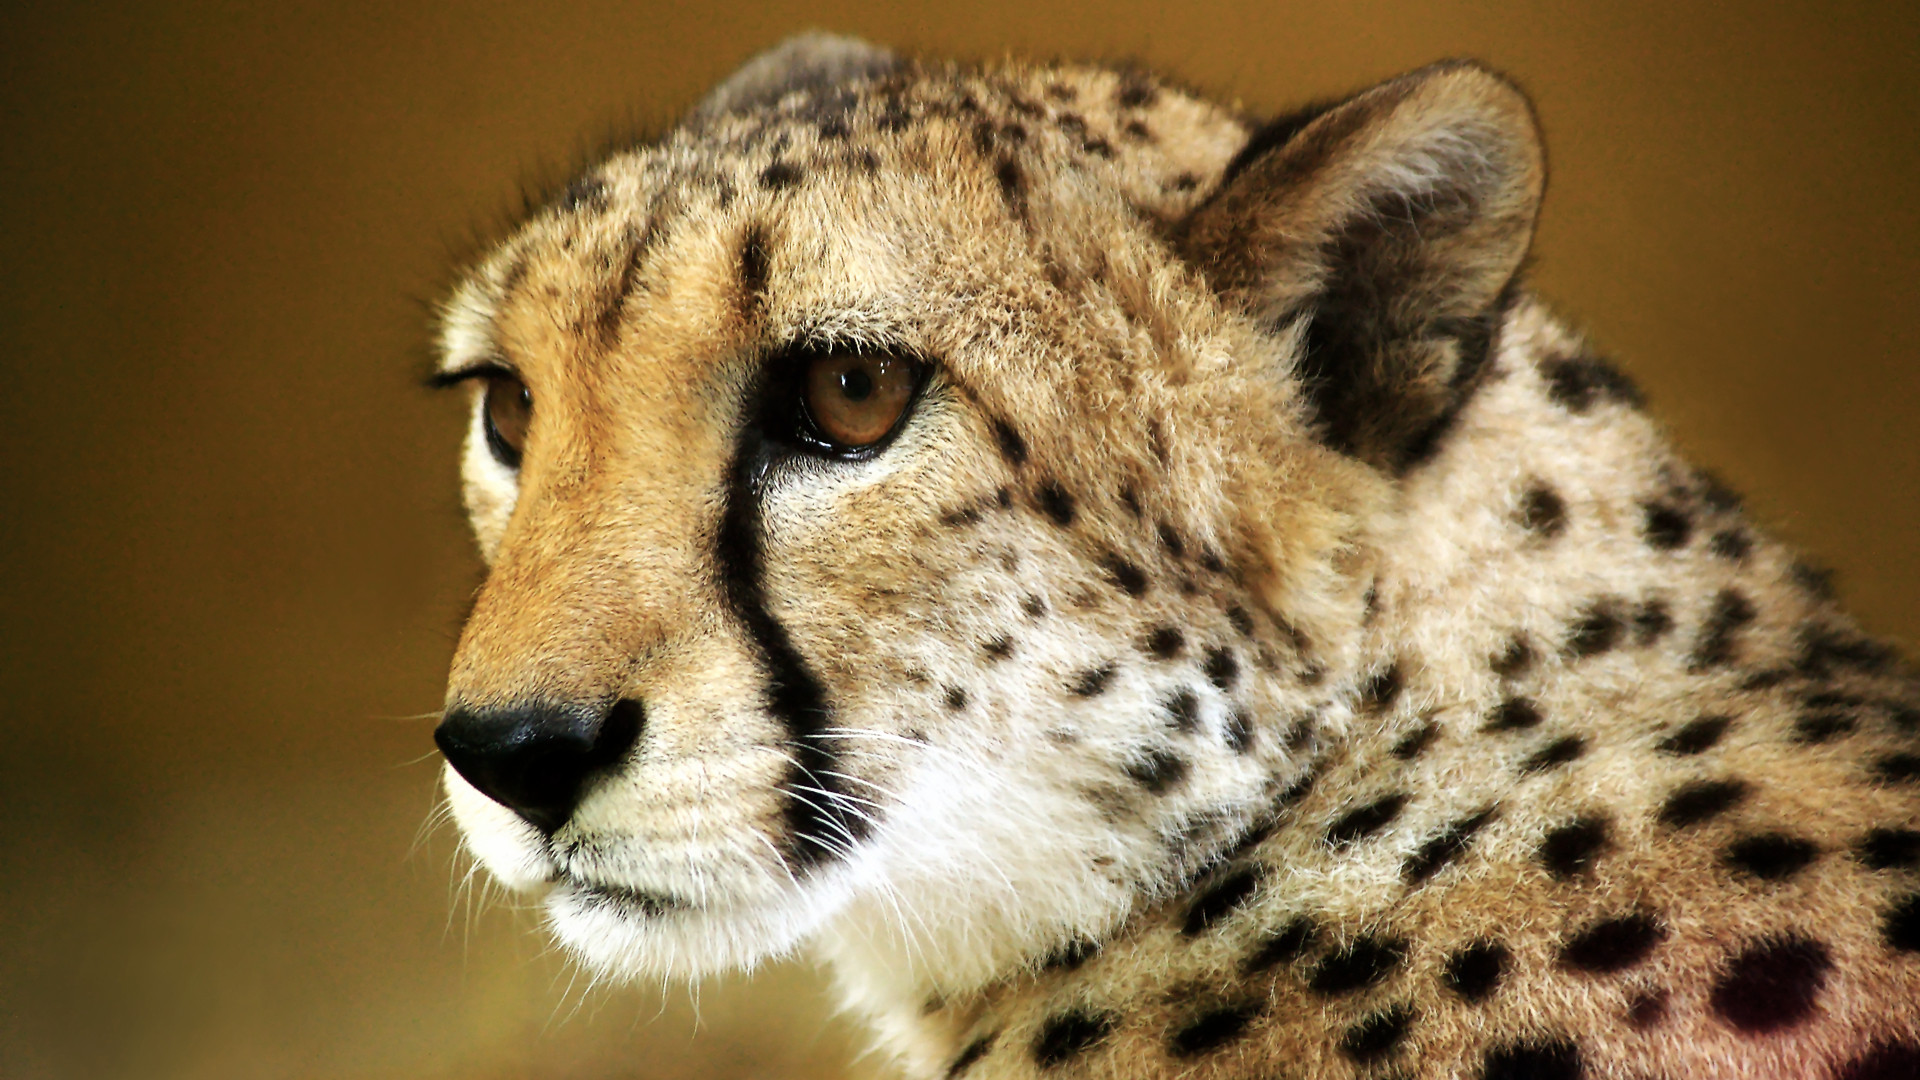 Baby Cheetah Face - wallpaper.